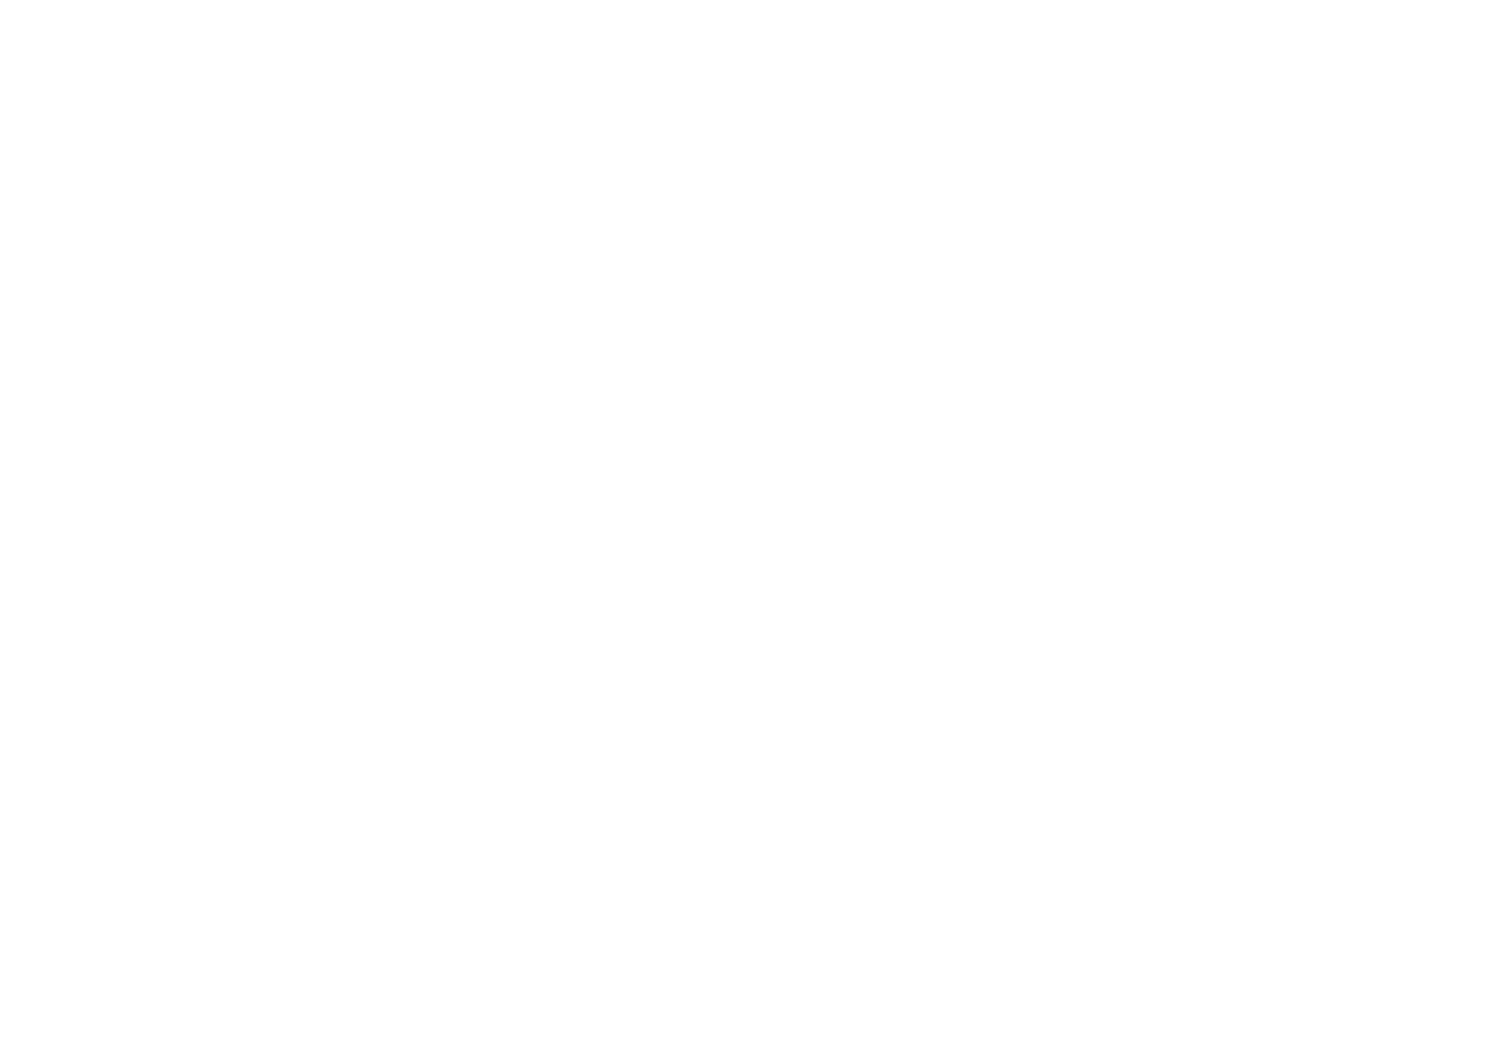 Better with Bilen